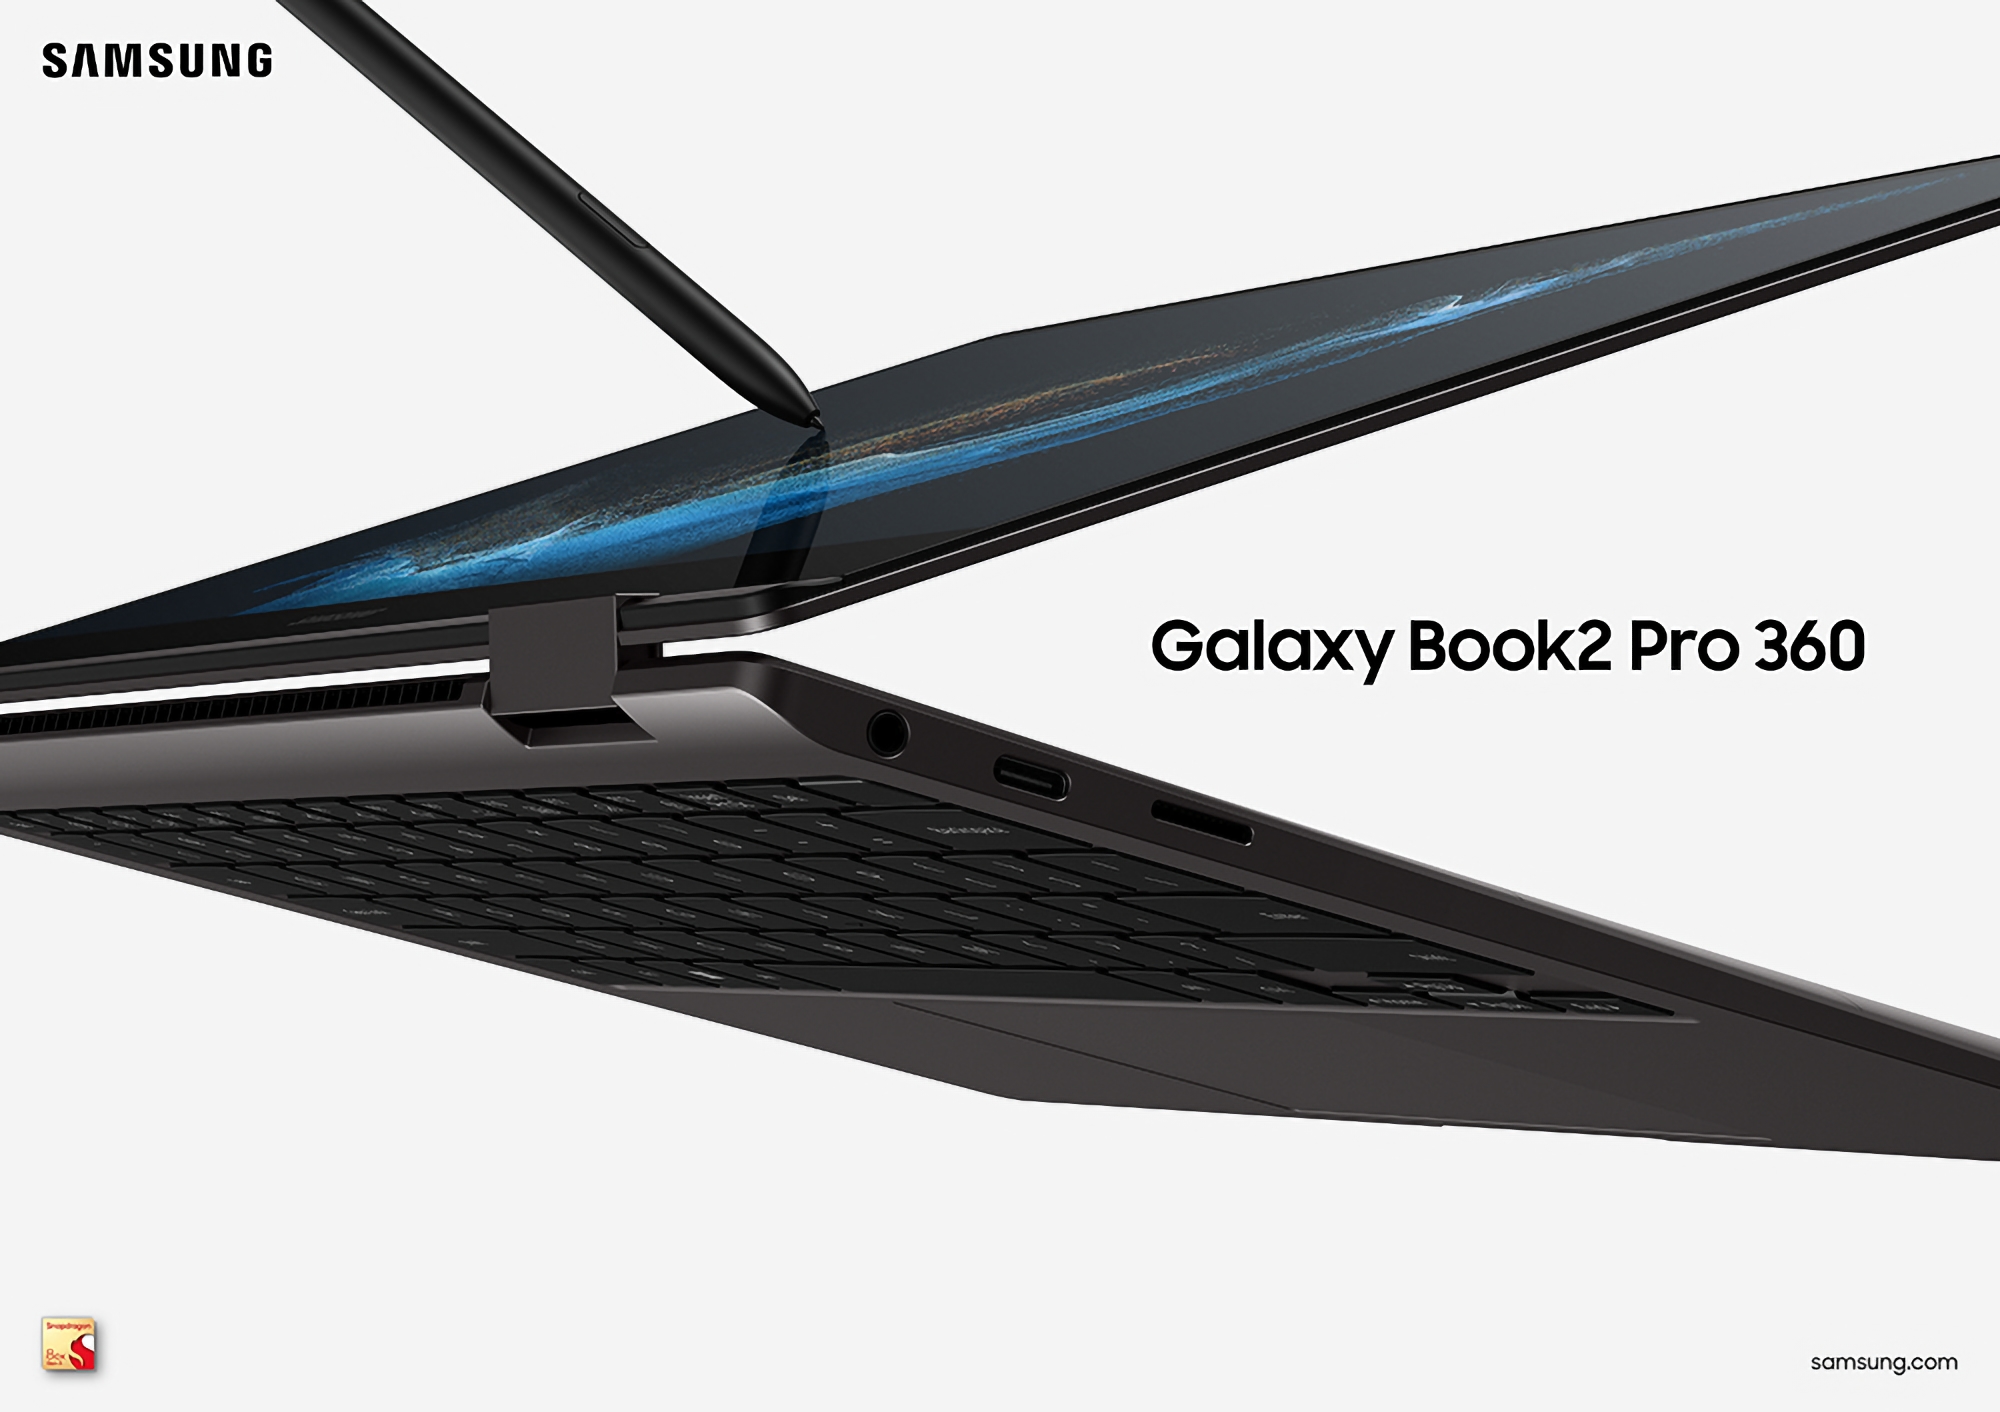 Samsung ha annunciato una nuova versione del Galaxy Book 2 Pro 360 con un chip ARM Qualcomm Snapdragon 8cx Gen 3.